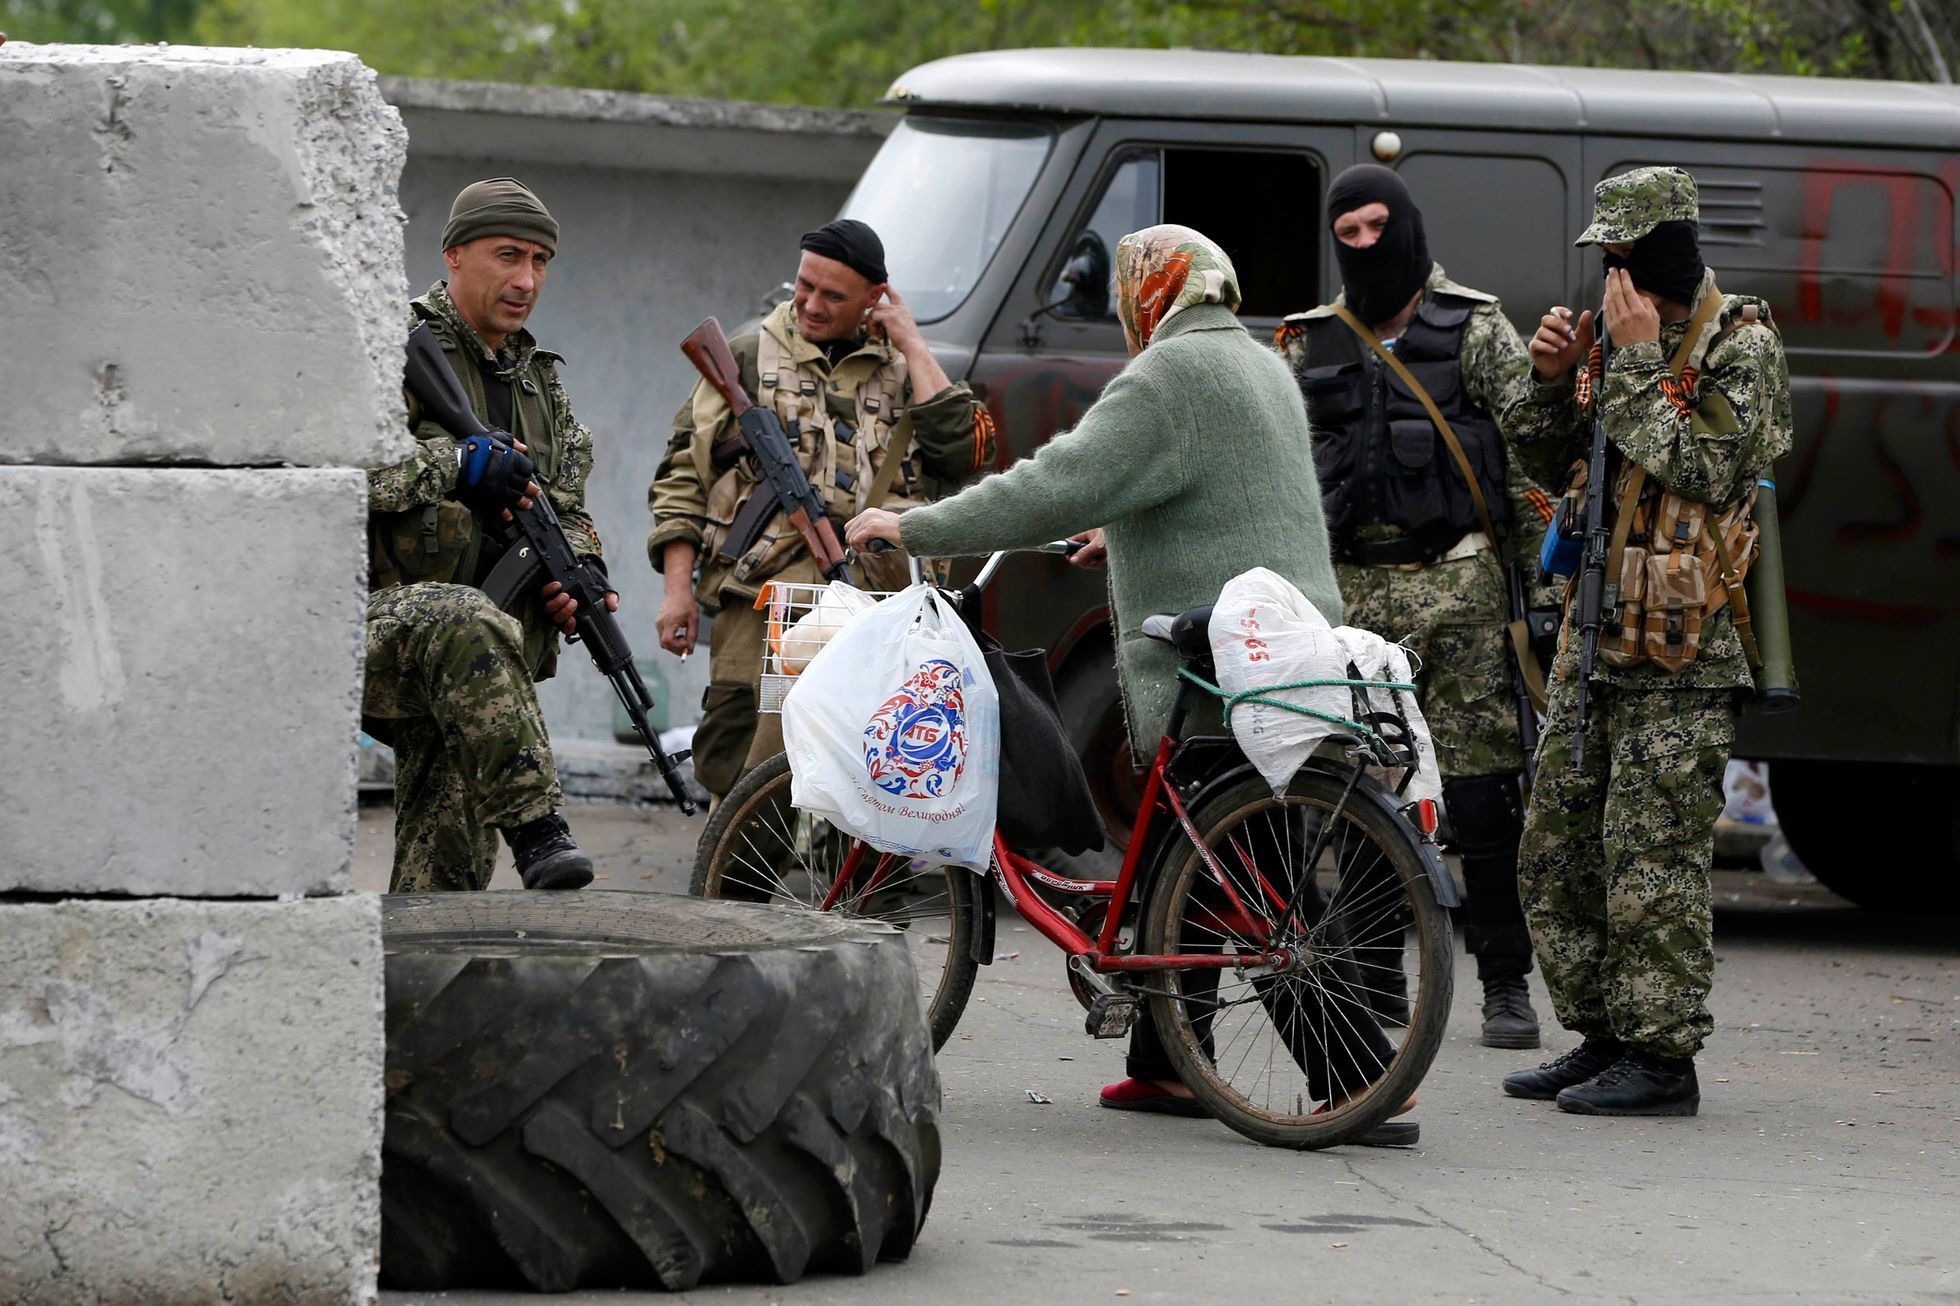 Ukrajina - Kramatorsk - ozbrojenci - separatisté